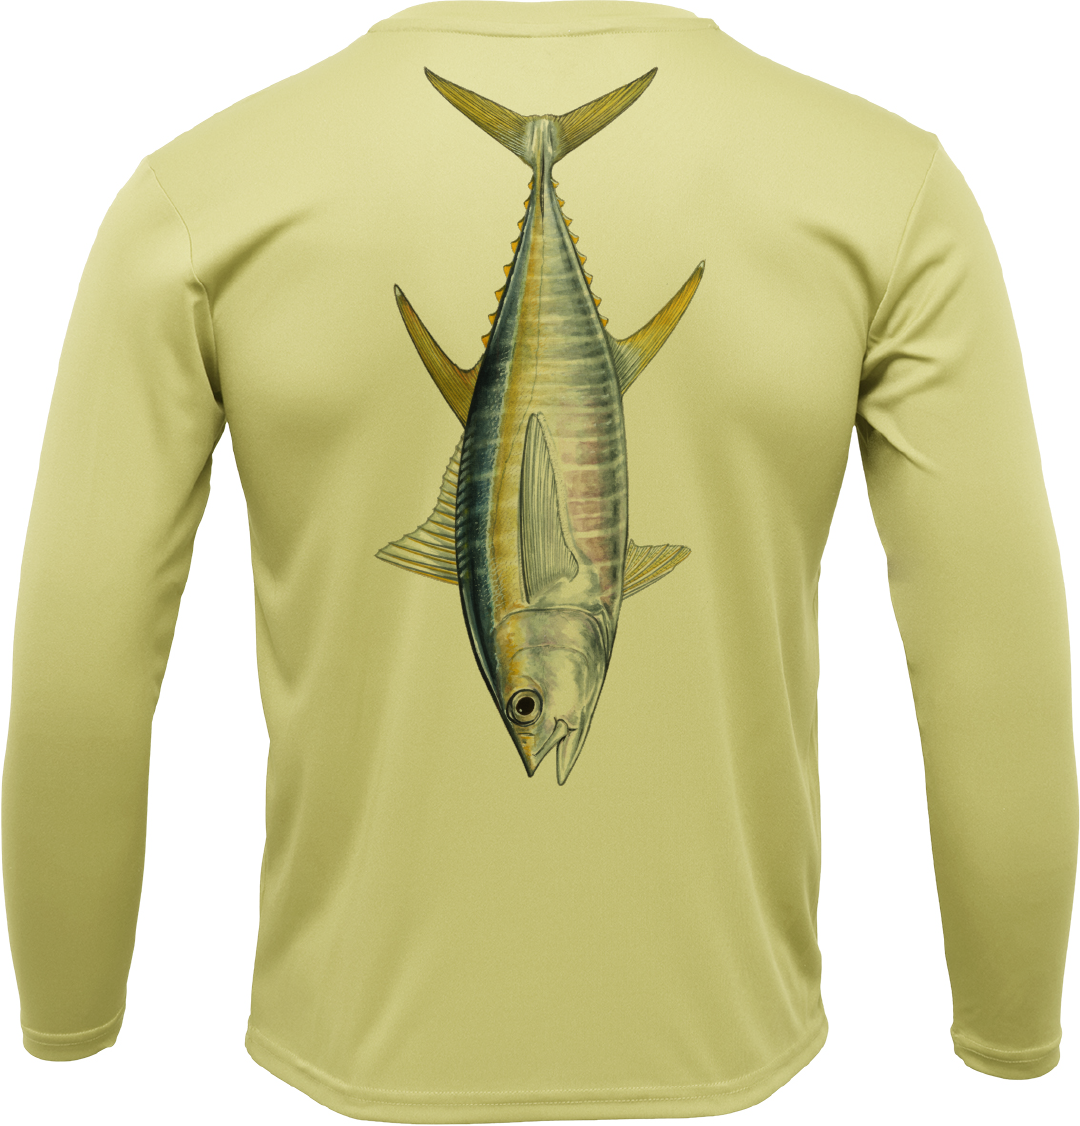 Bimini, Bahamas Tuna Long Sleeve UPF 50+ Dry-Fit Shirt – Saltwater Born